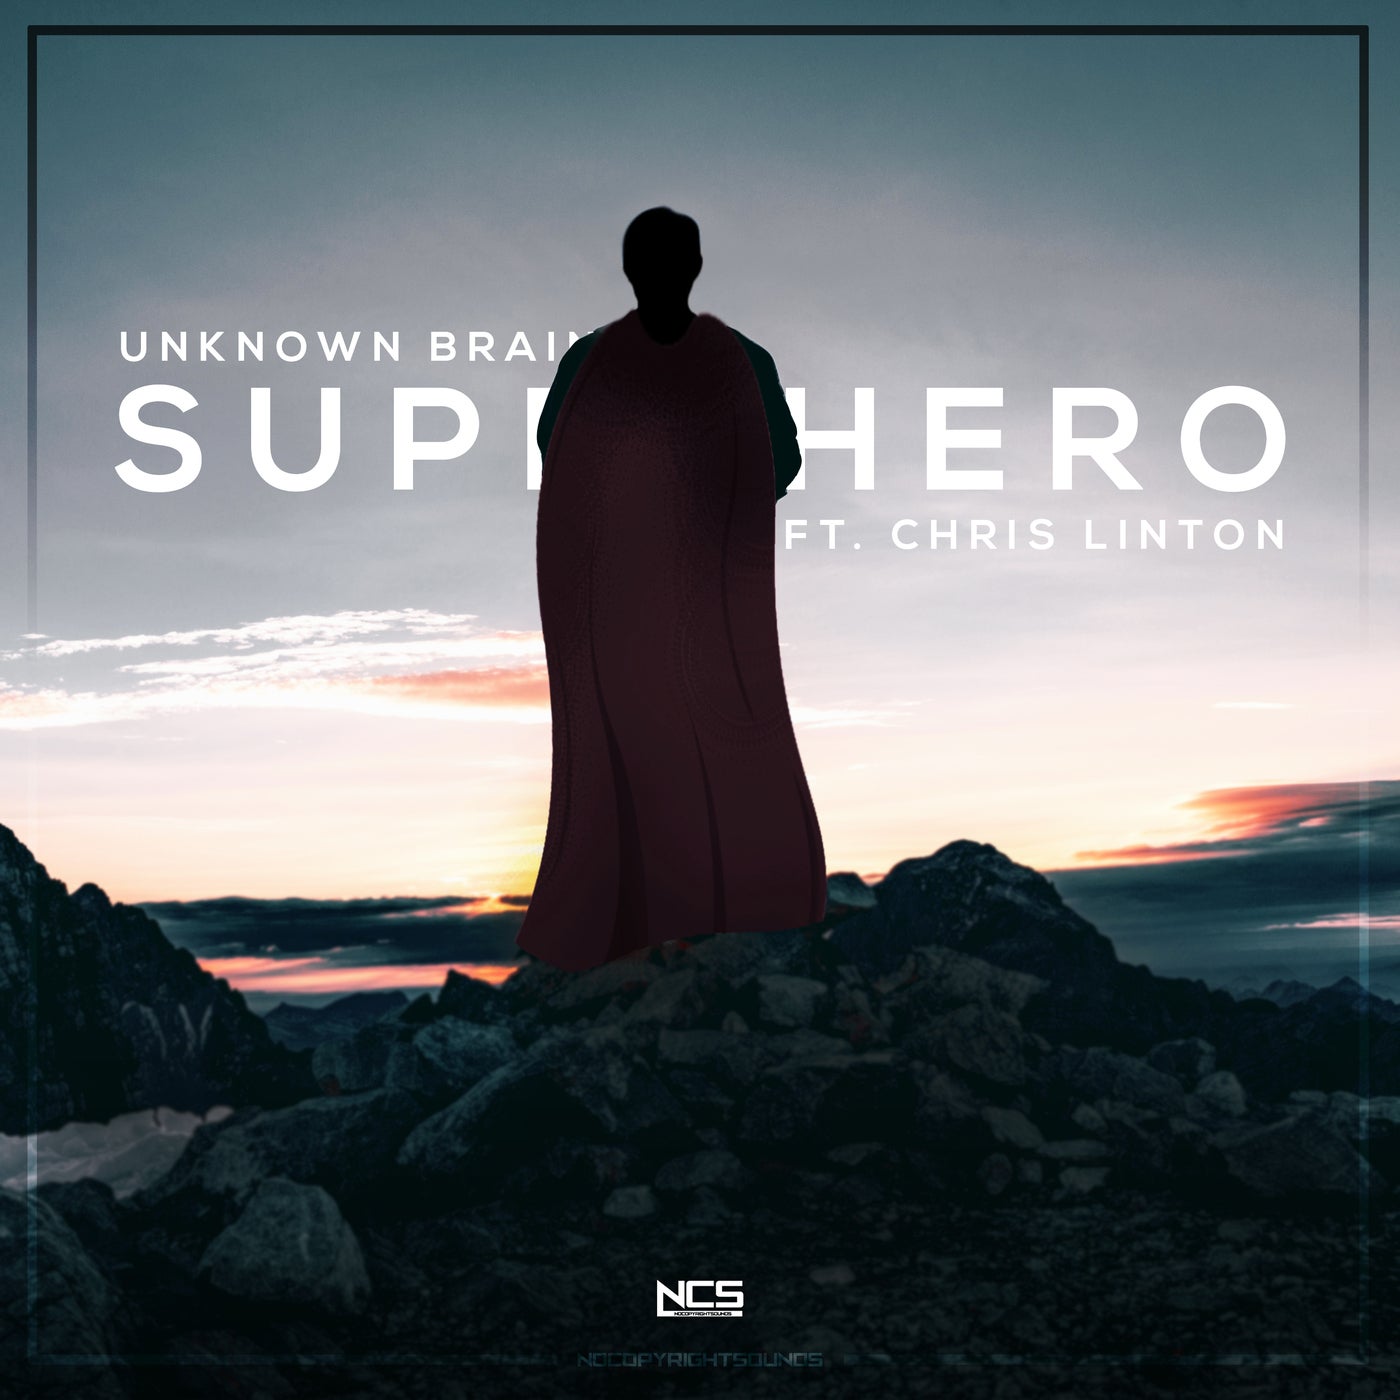 Hero brain. Chris Linton Superhero. Superhero Unknown Brain feat. Chris Linton. Superhero Unknown Brain. Feat. Chris Linton.